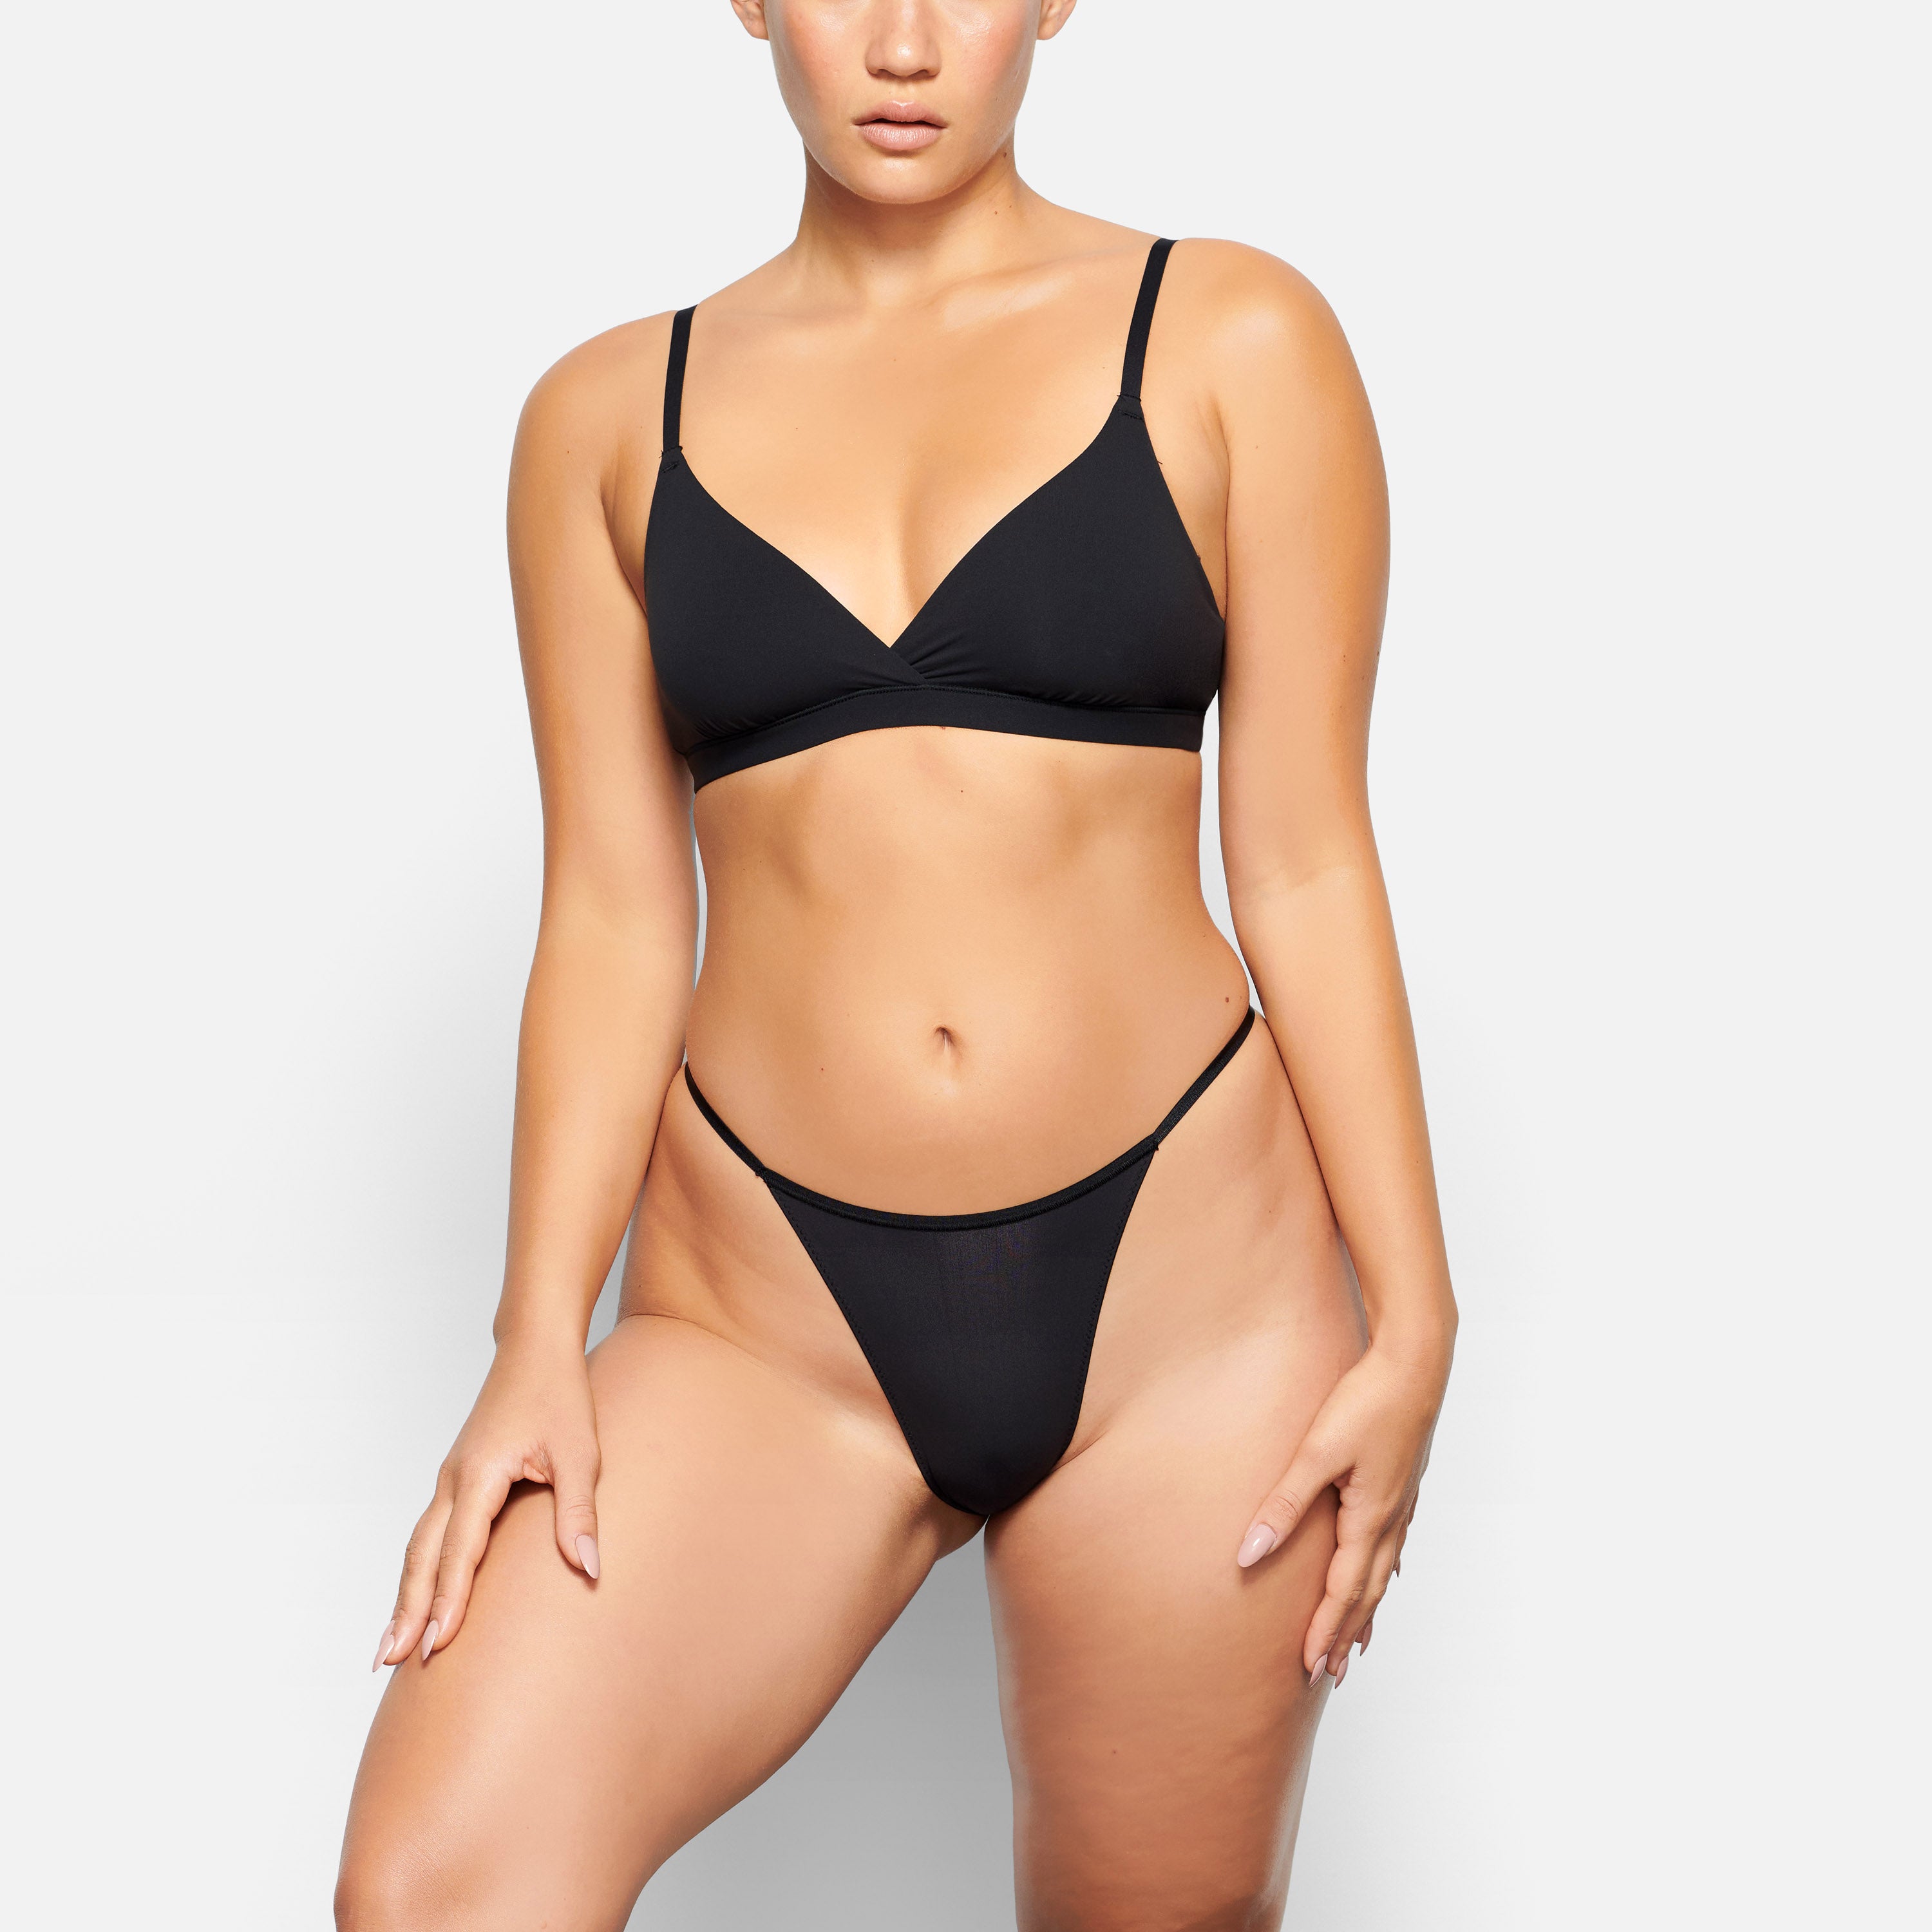 US Sexy Lingerie Women Micro G-String Underwear Bikini Bra Top